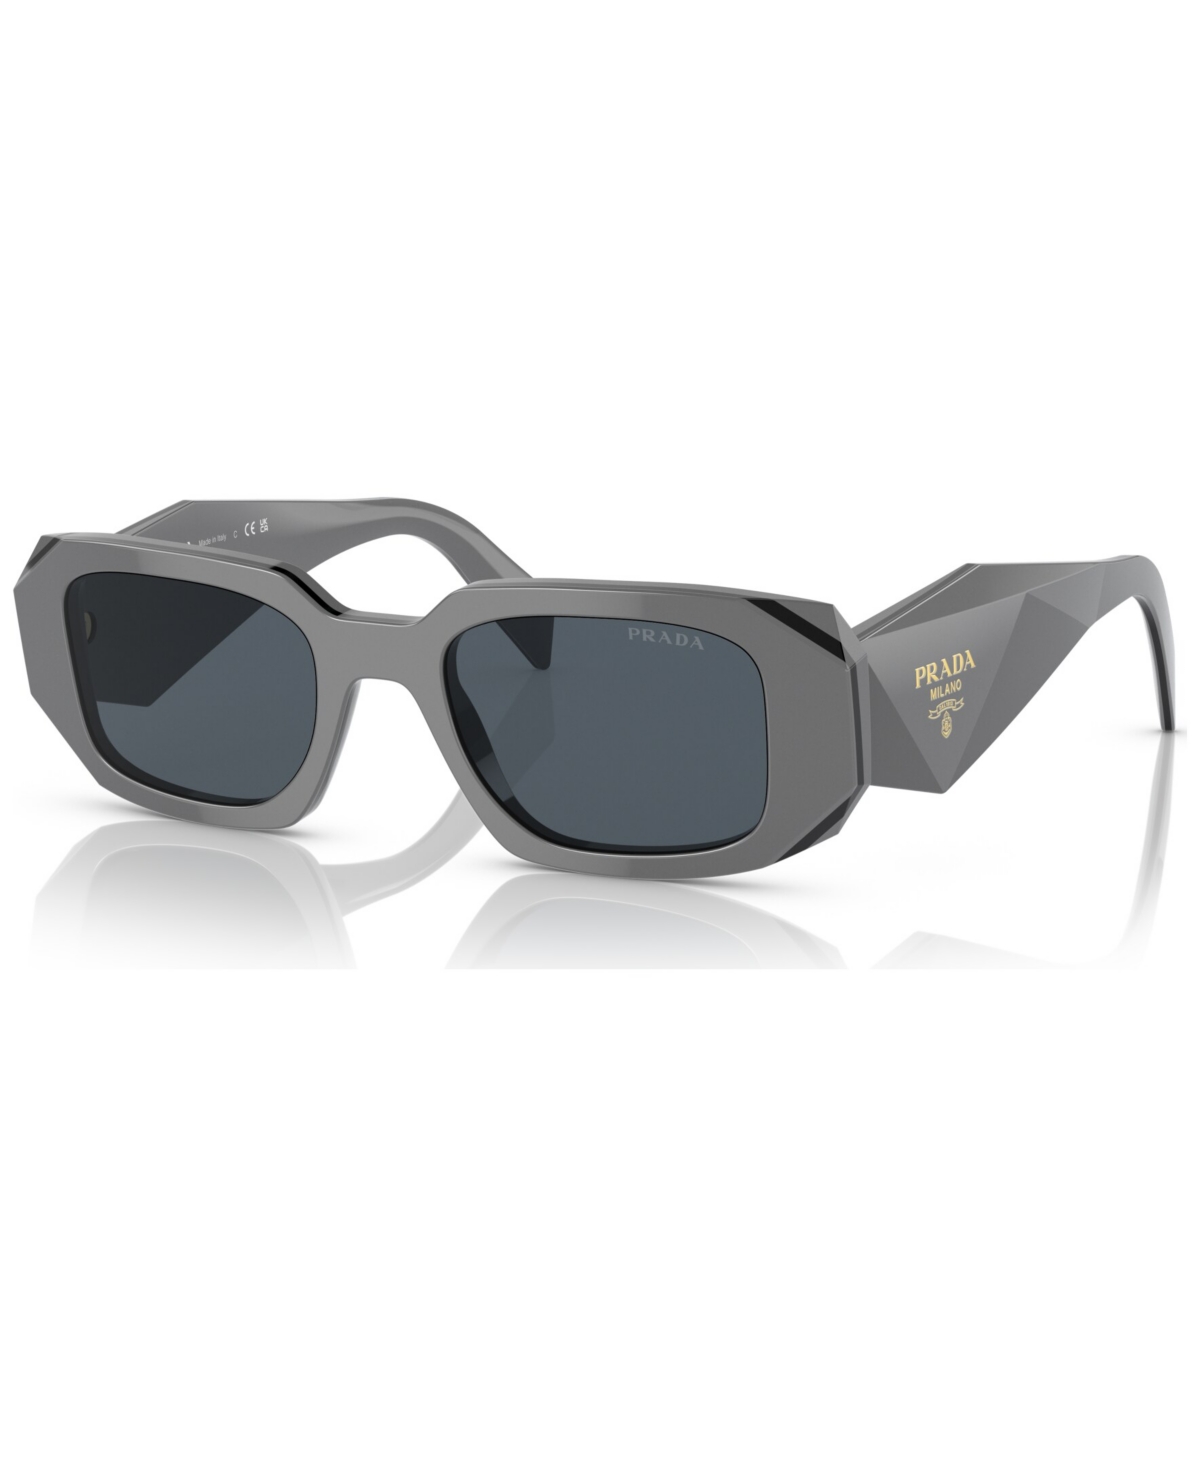 Prada Women's Sunglasses, Pr 17ws In Marble Black